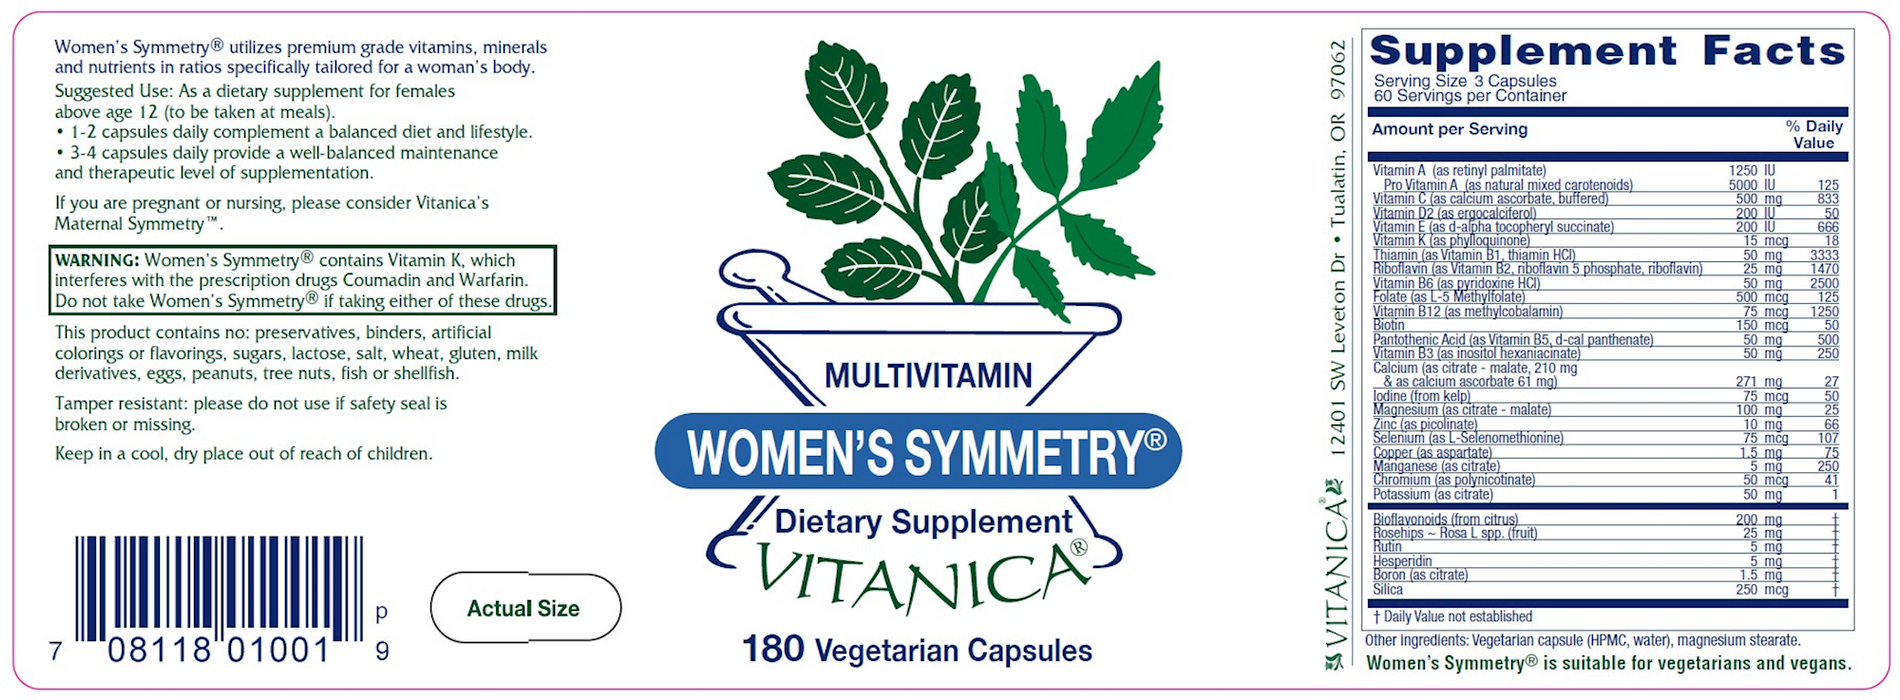 Vitanica Women's Symmetry